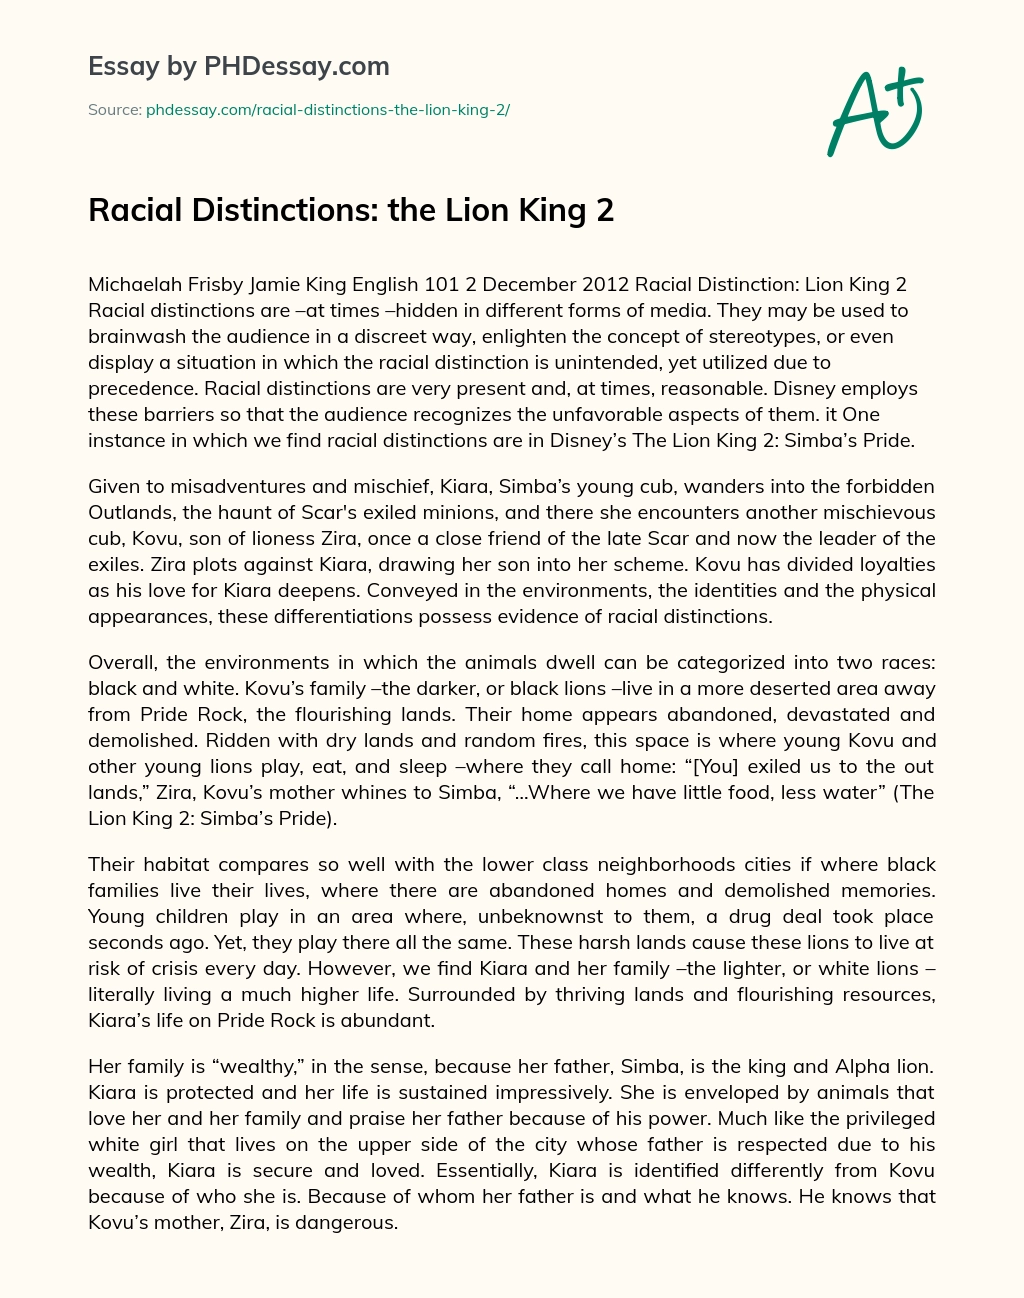 Racial Distinctions: the Lion King 2 essay